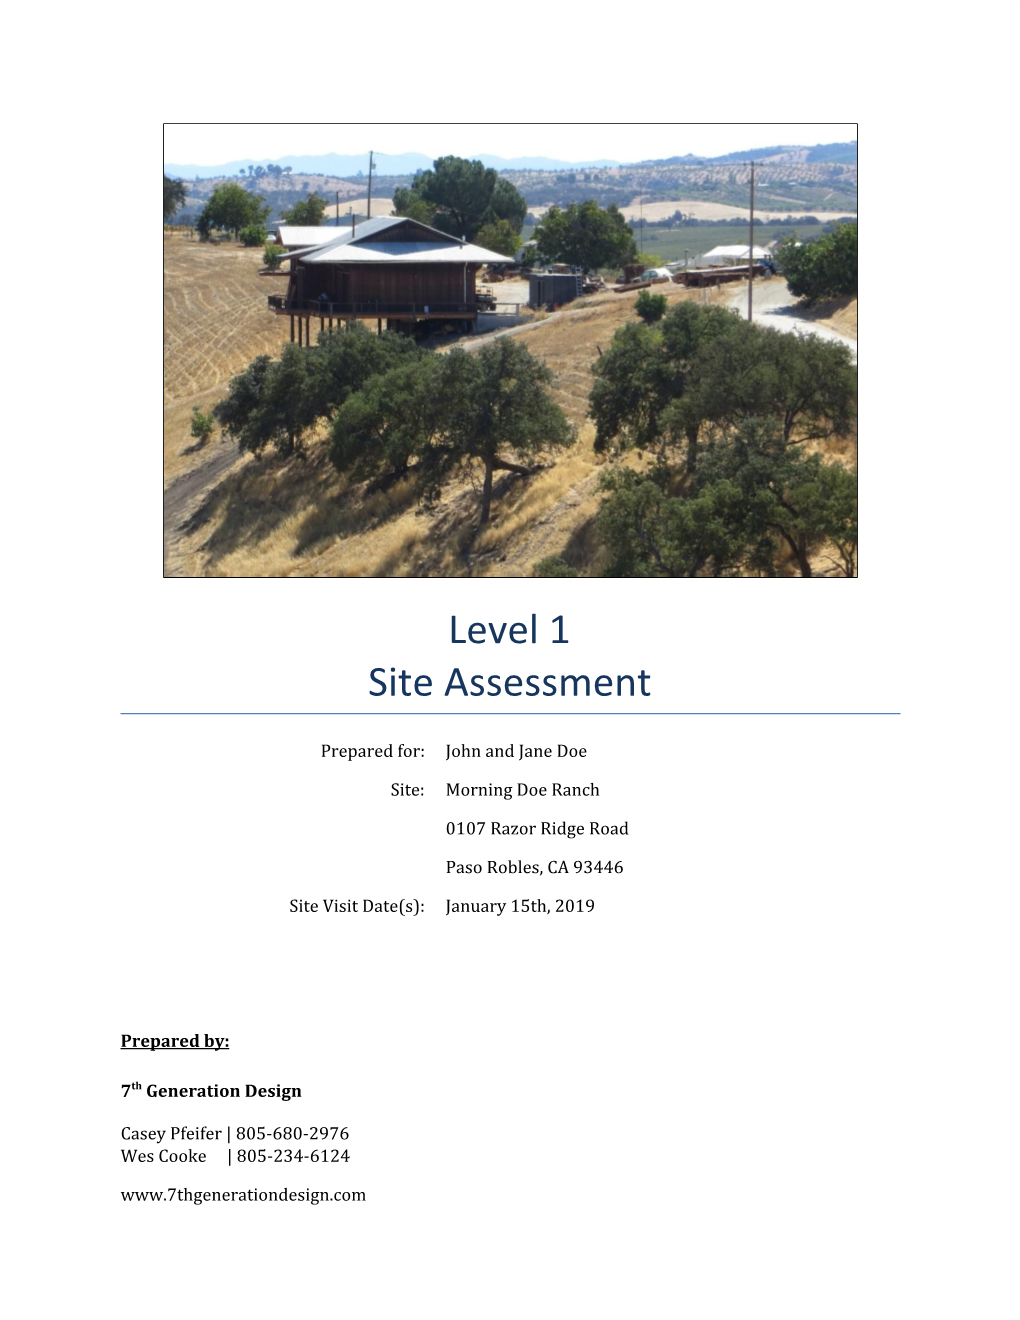 Level 1 Site Assessment